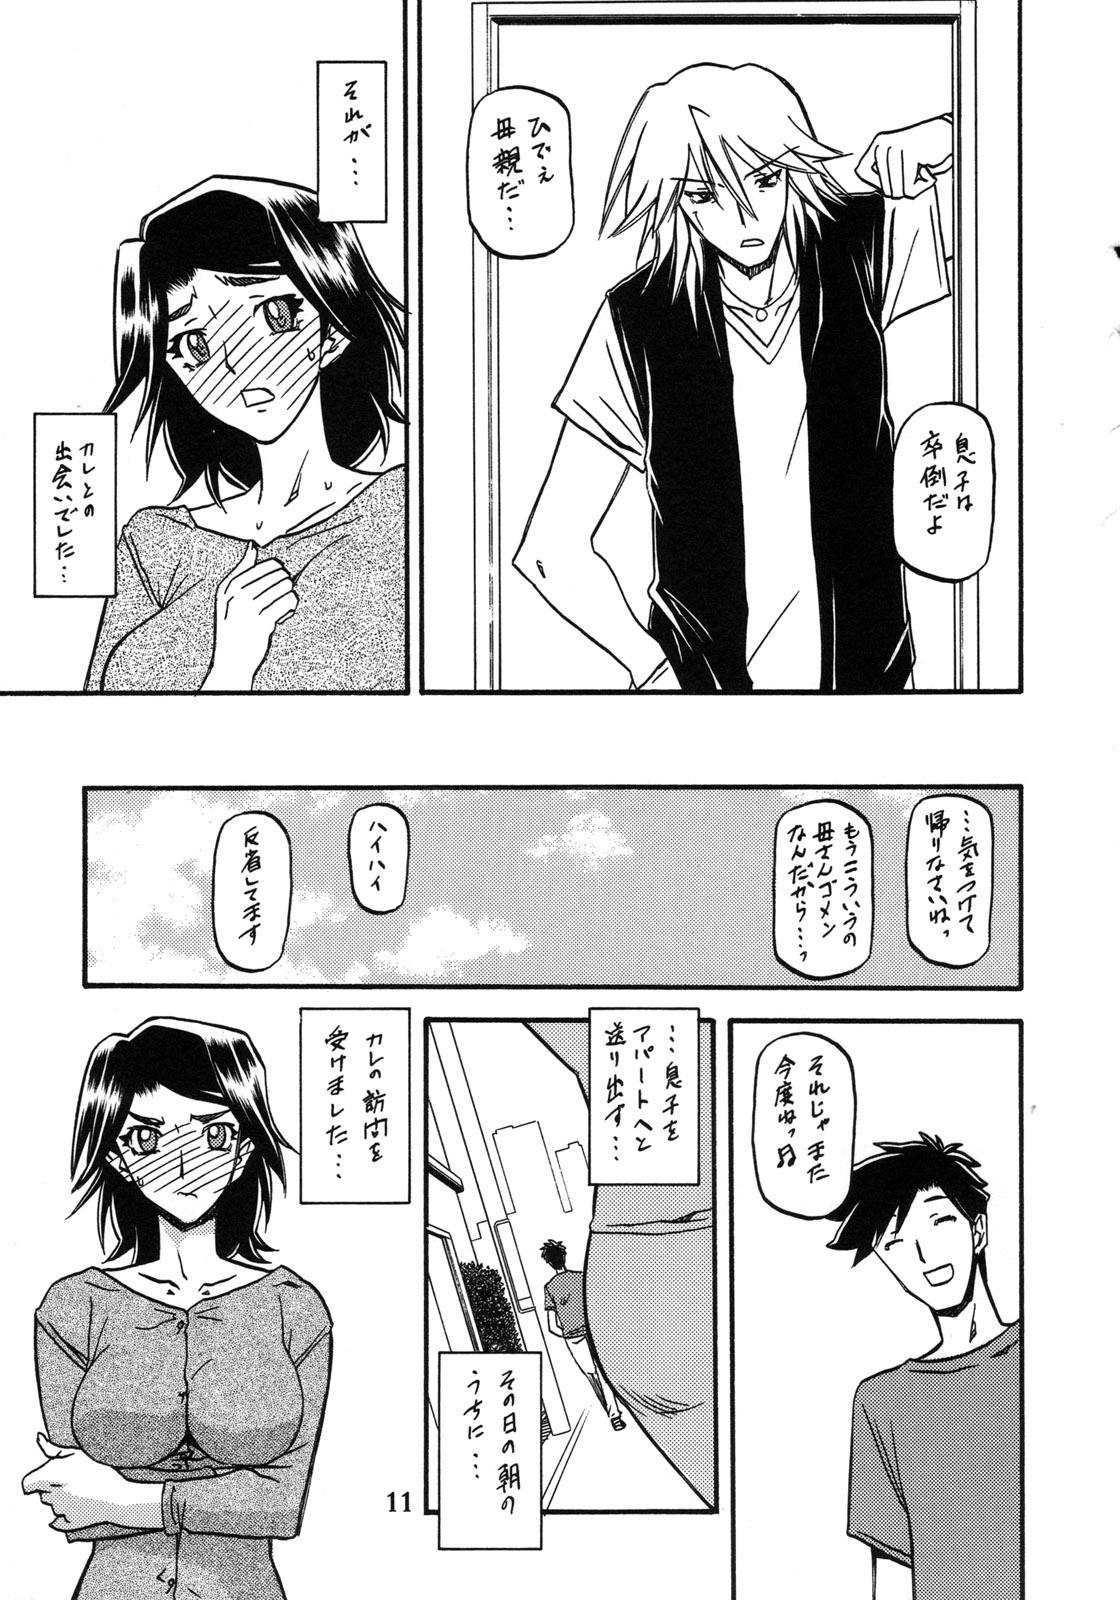 Woman Fucking Akebi no Mi - Miwako Katei - Akebi no mi Nerd - Page 11